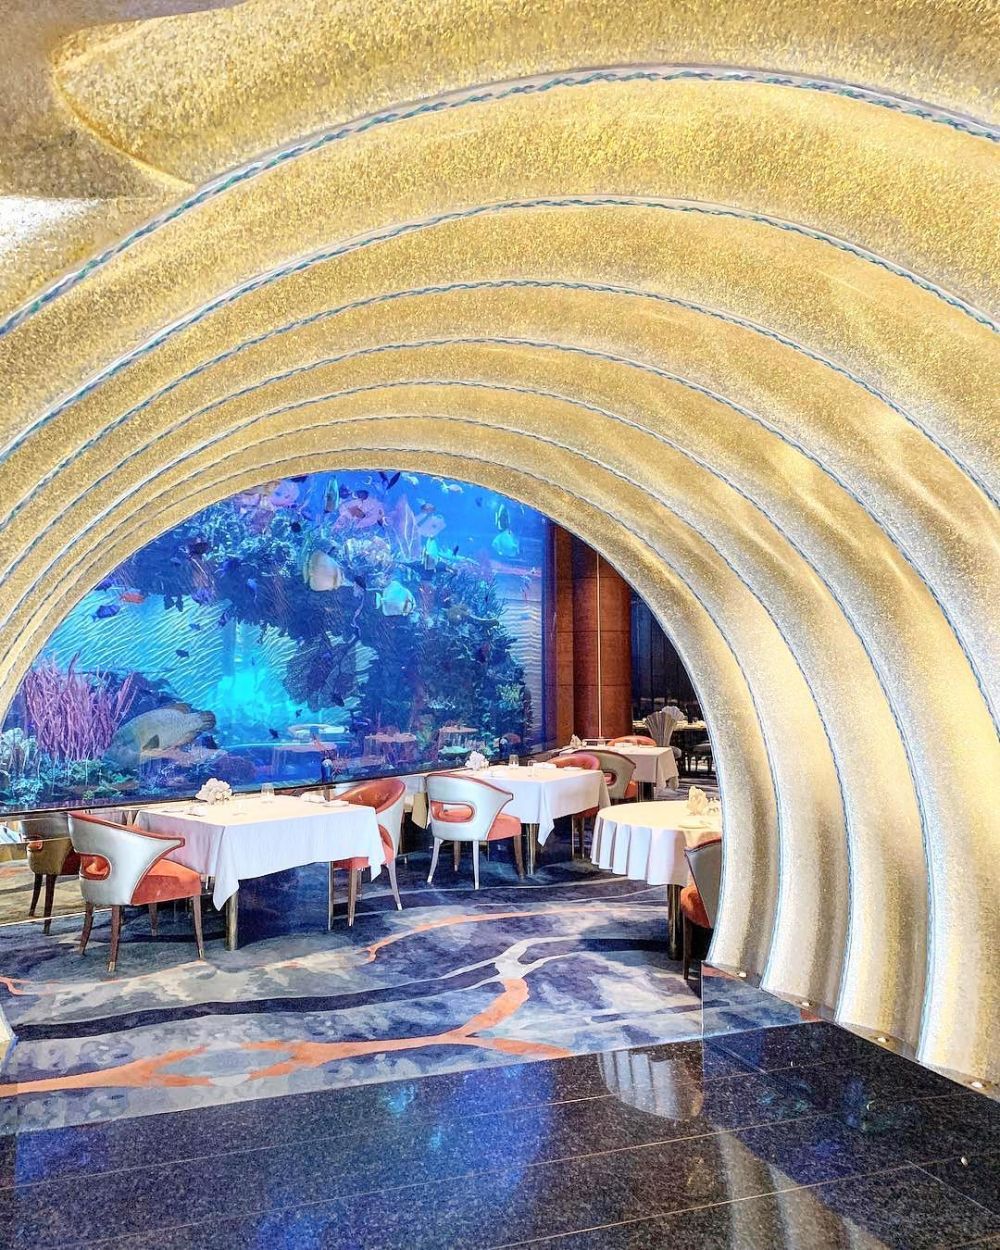 8 Restoran Paling Mewah dan Glamor di Dubai, Makan Jadi Berkesan!